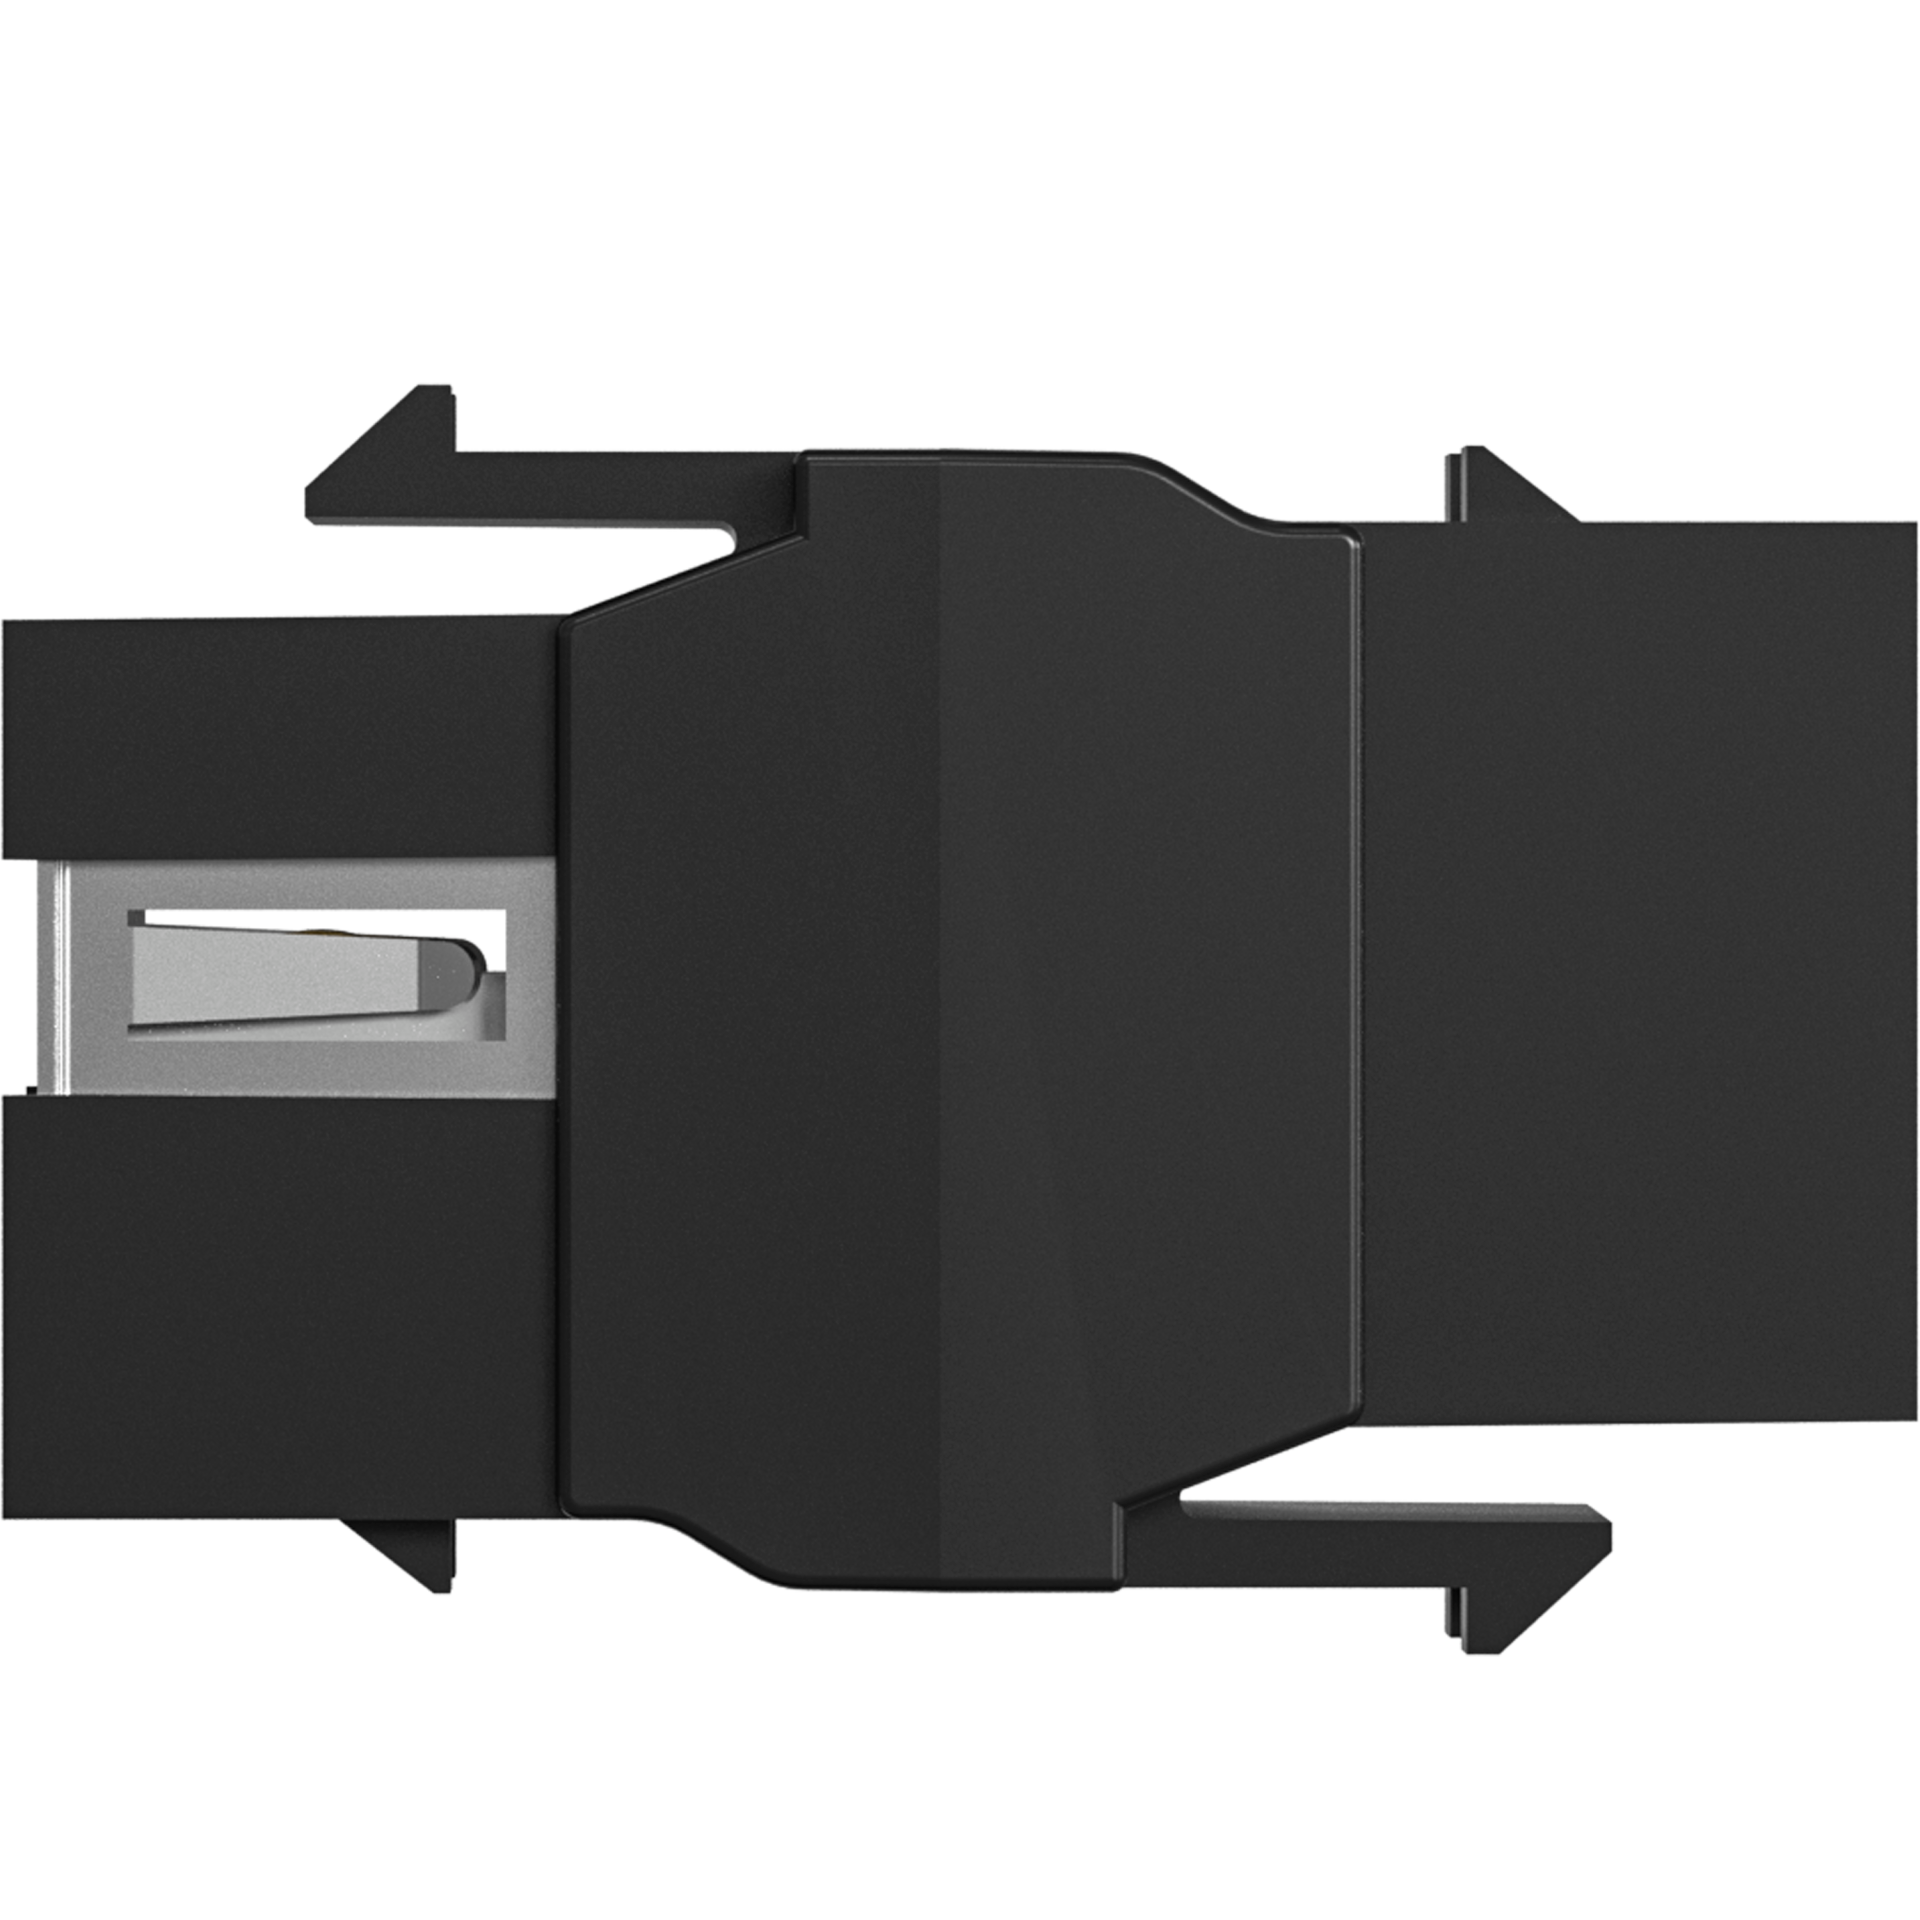 Keystone Einbauadapter USB2.0 A - B, schwarz